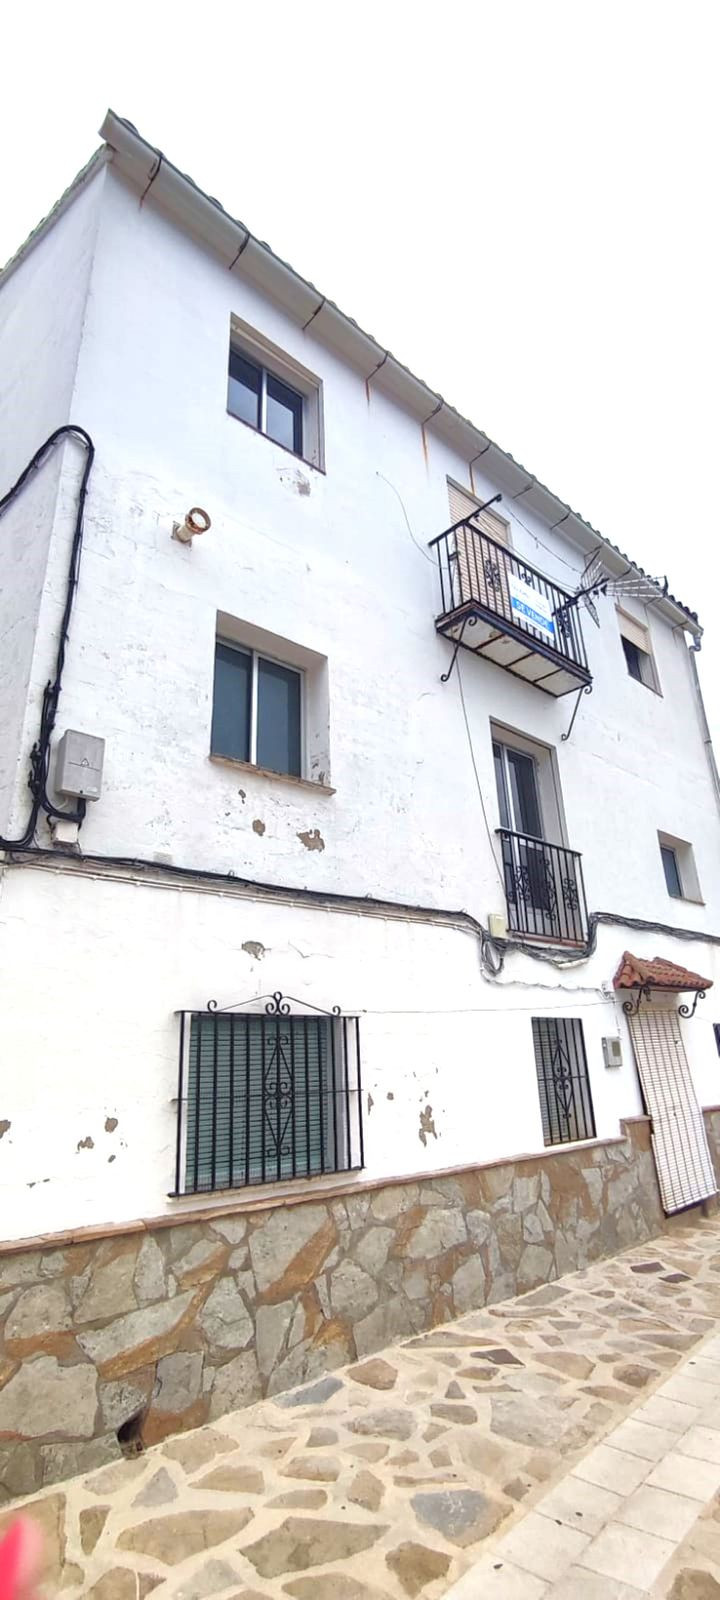 						Villa  Pareada
													en venta 
																			 en Gaucín
					